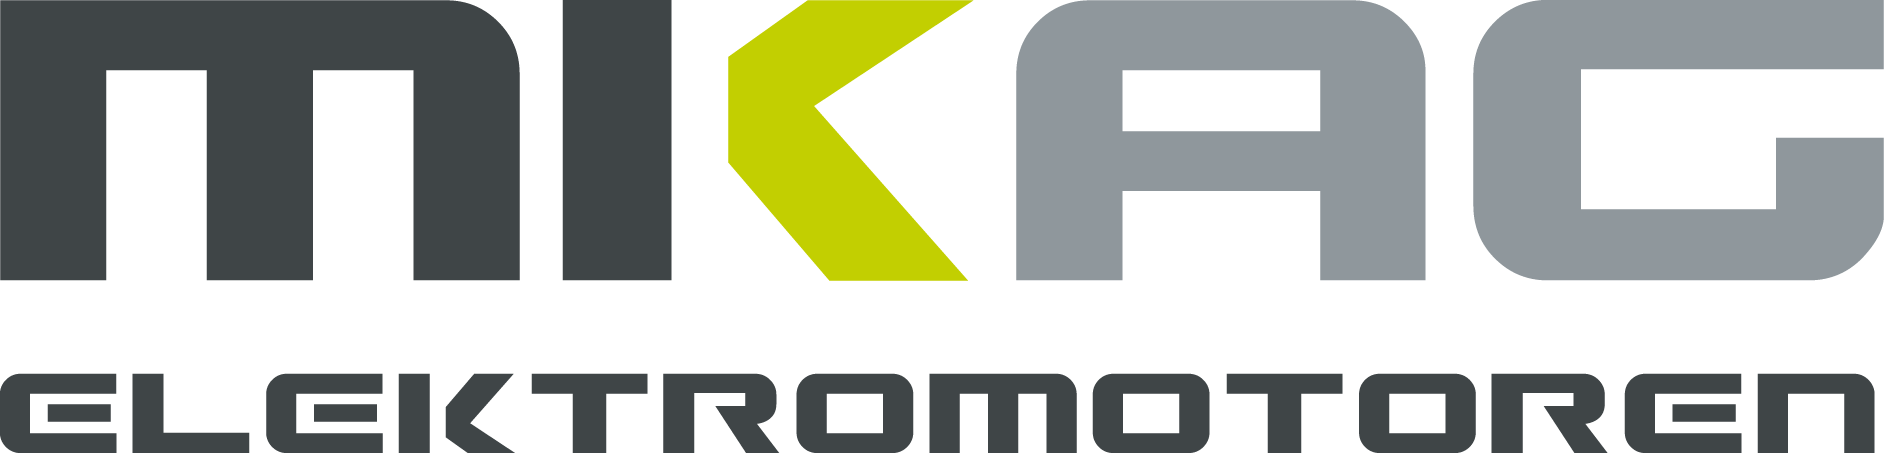 MK-Elektromotoren AG Logo